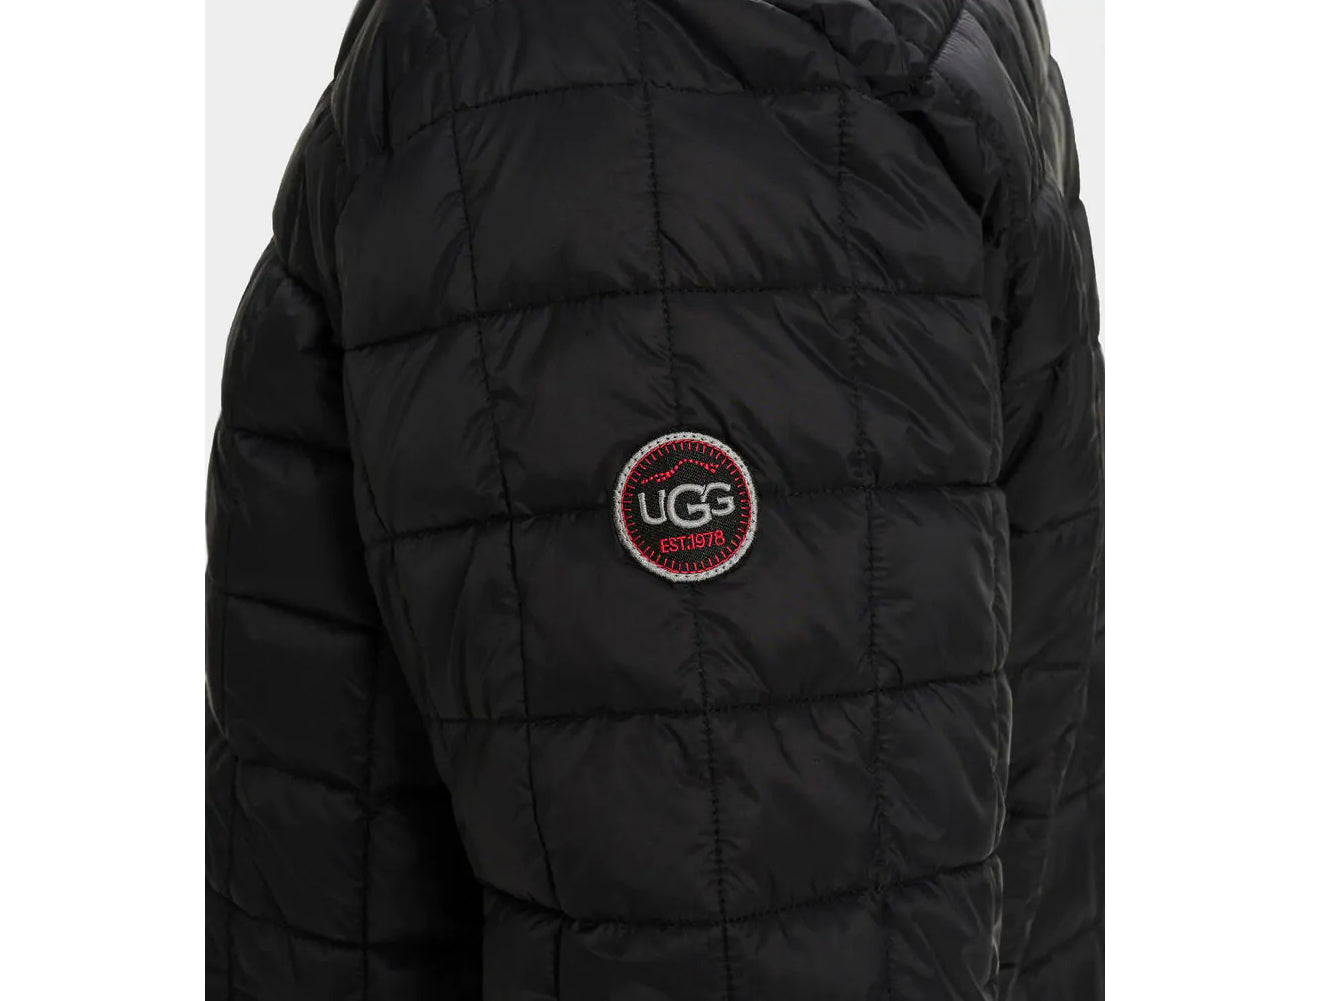 UGG Men's Joel Packable Quilted Jacket